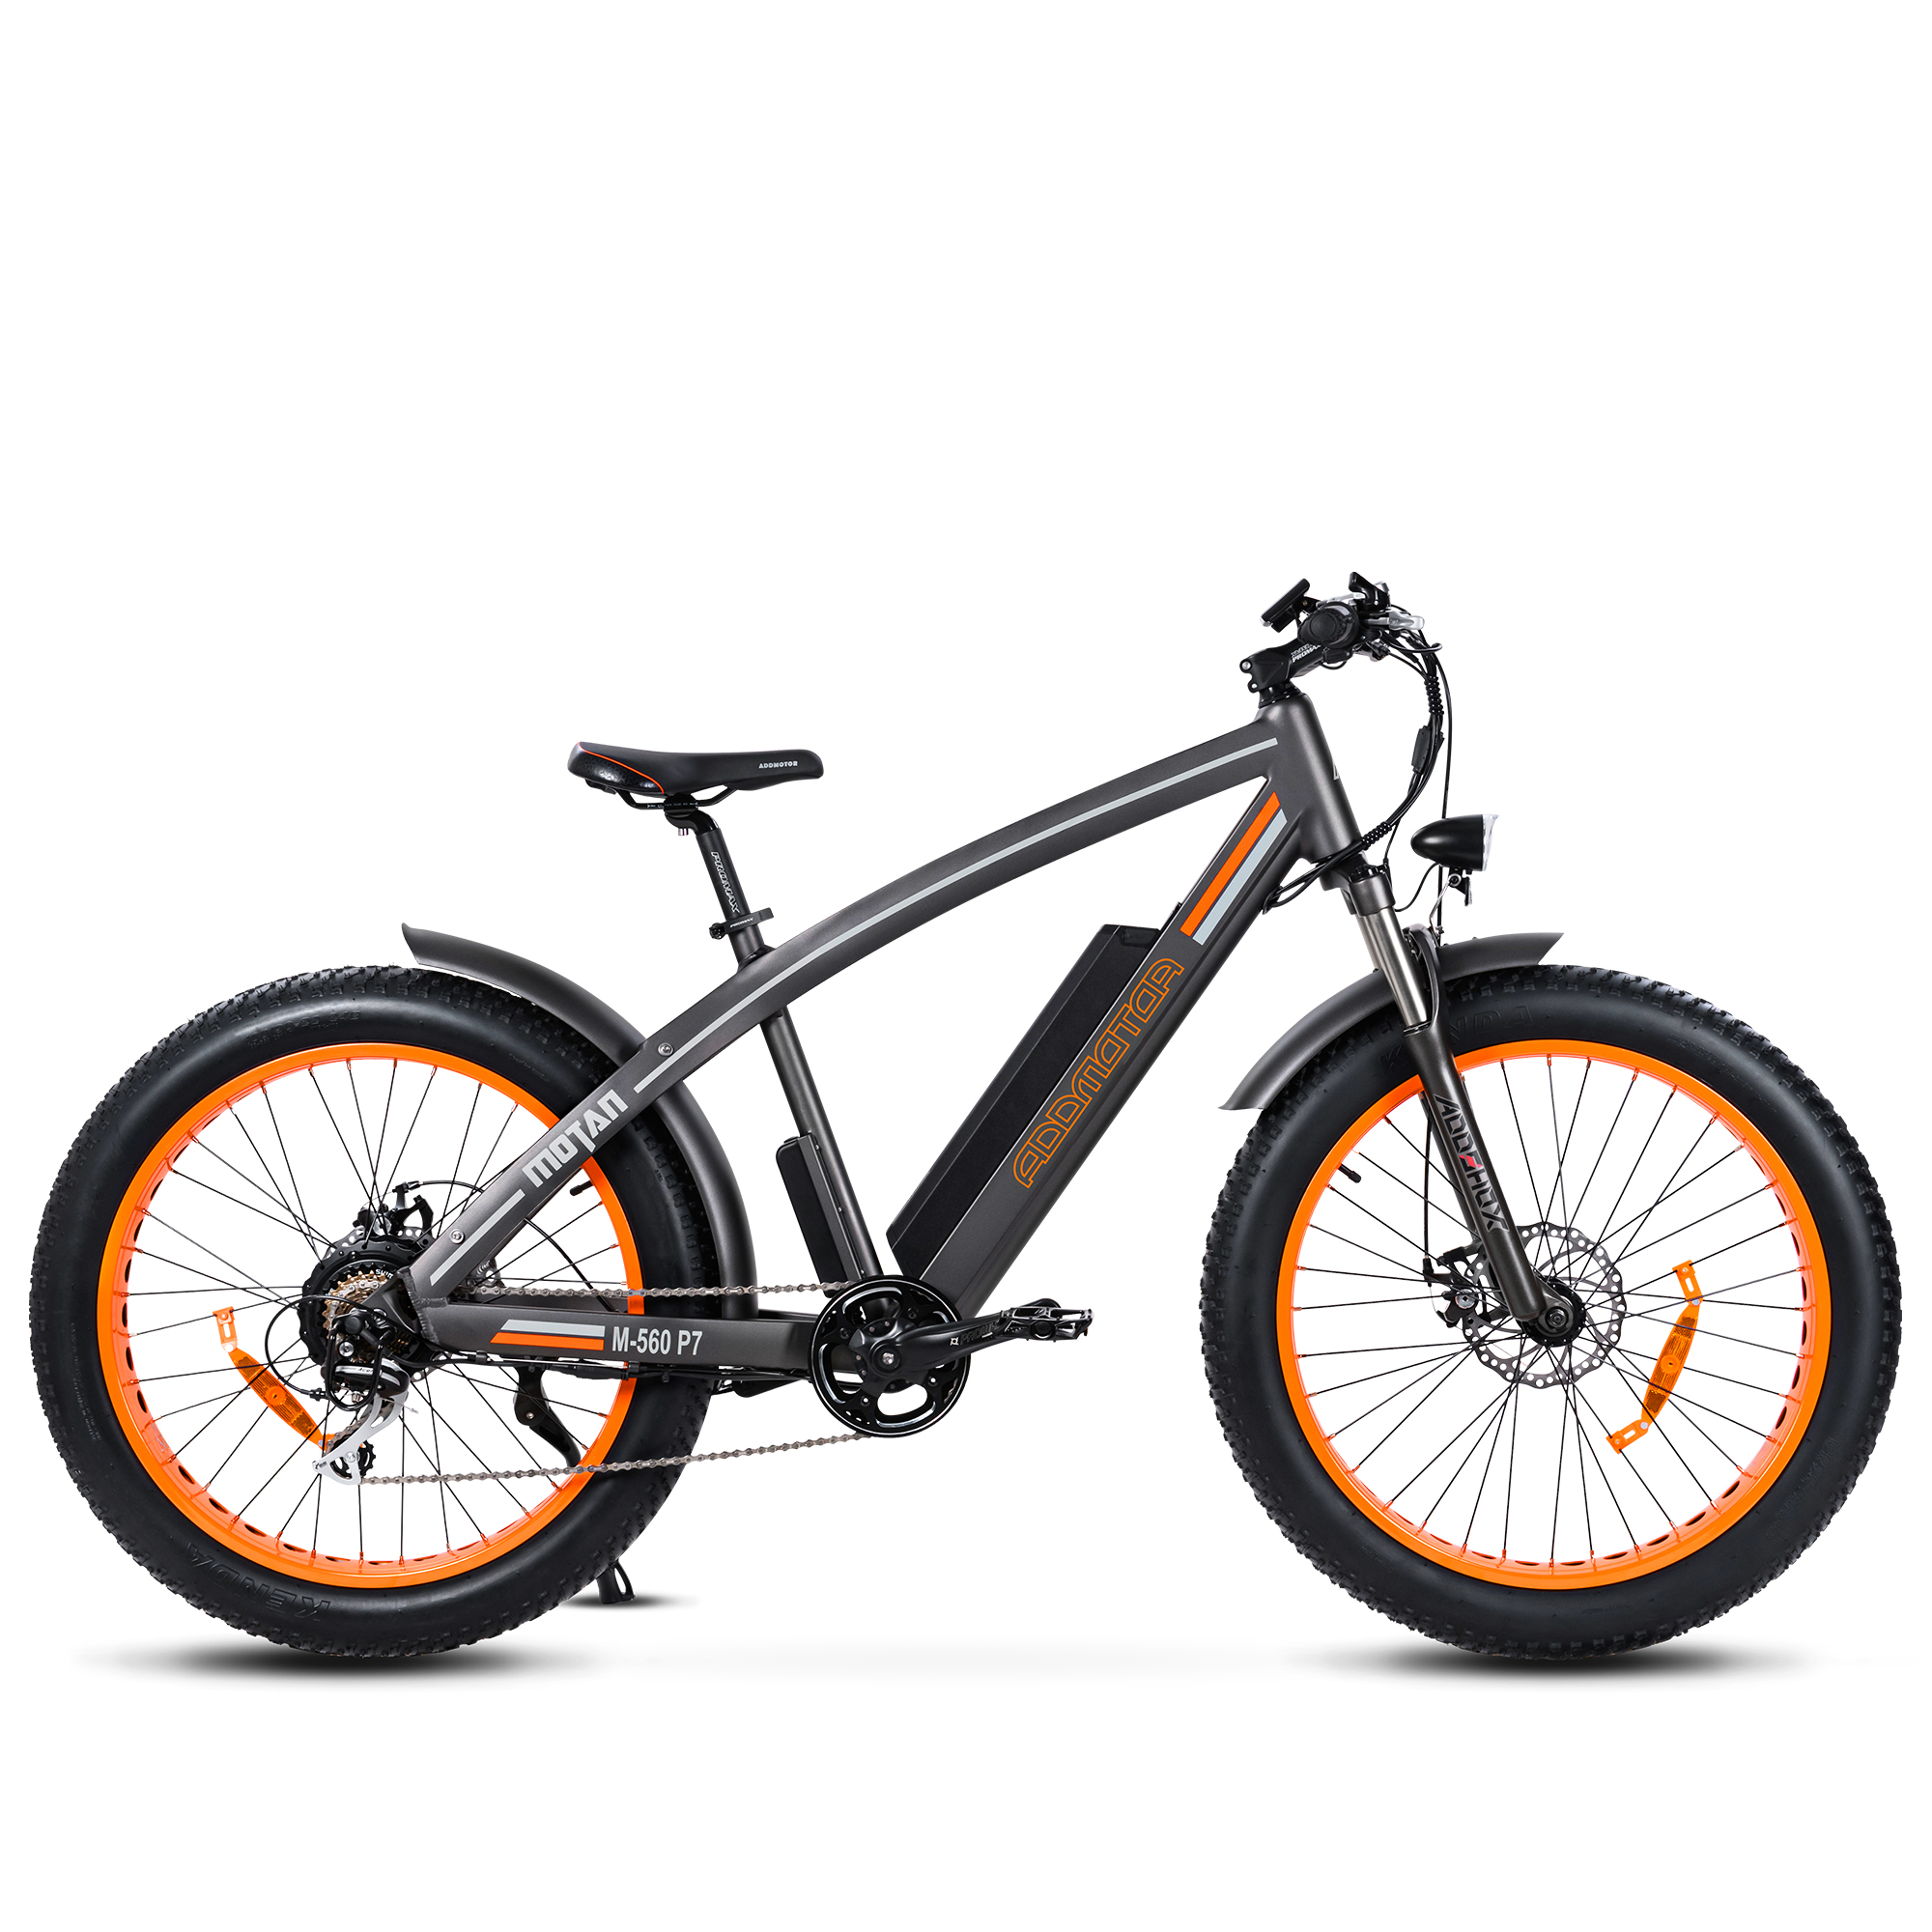 M-560 P7 All-Terrain E-Bike Orange